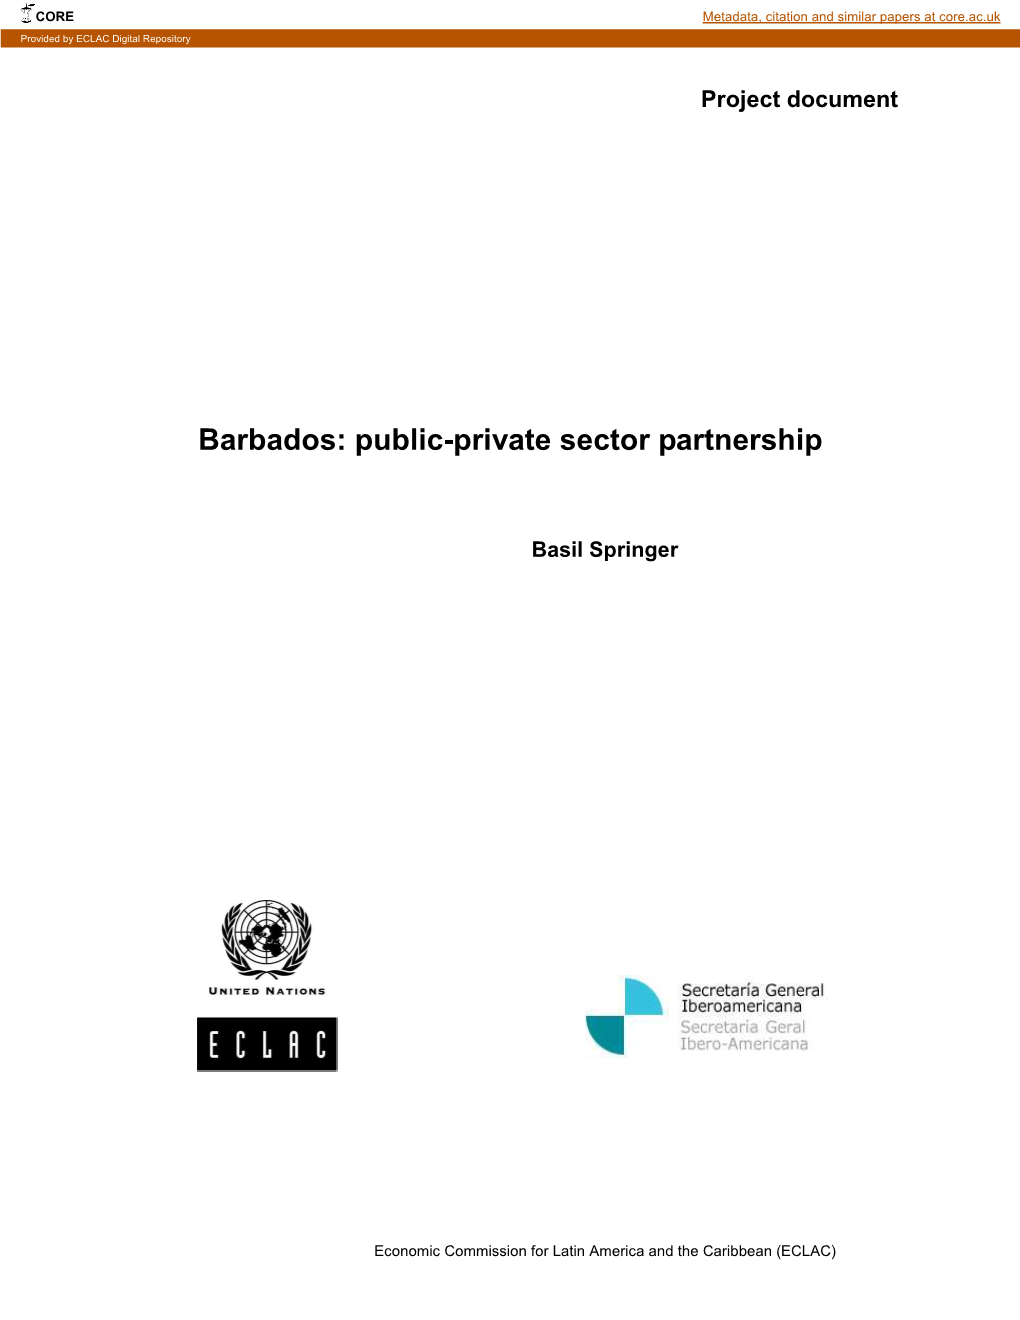 Barbados: Public-Private Sector Partnership